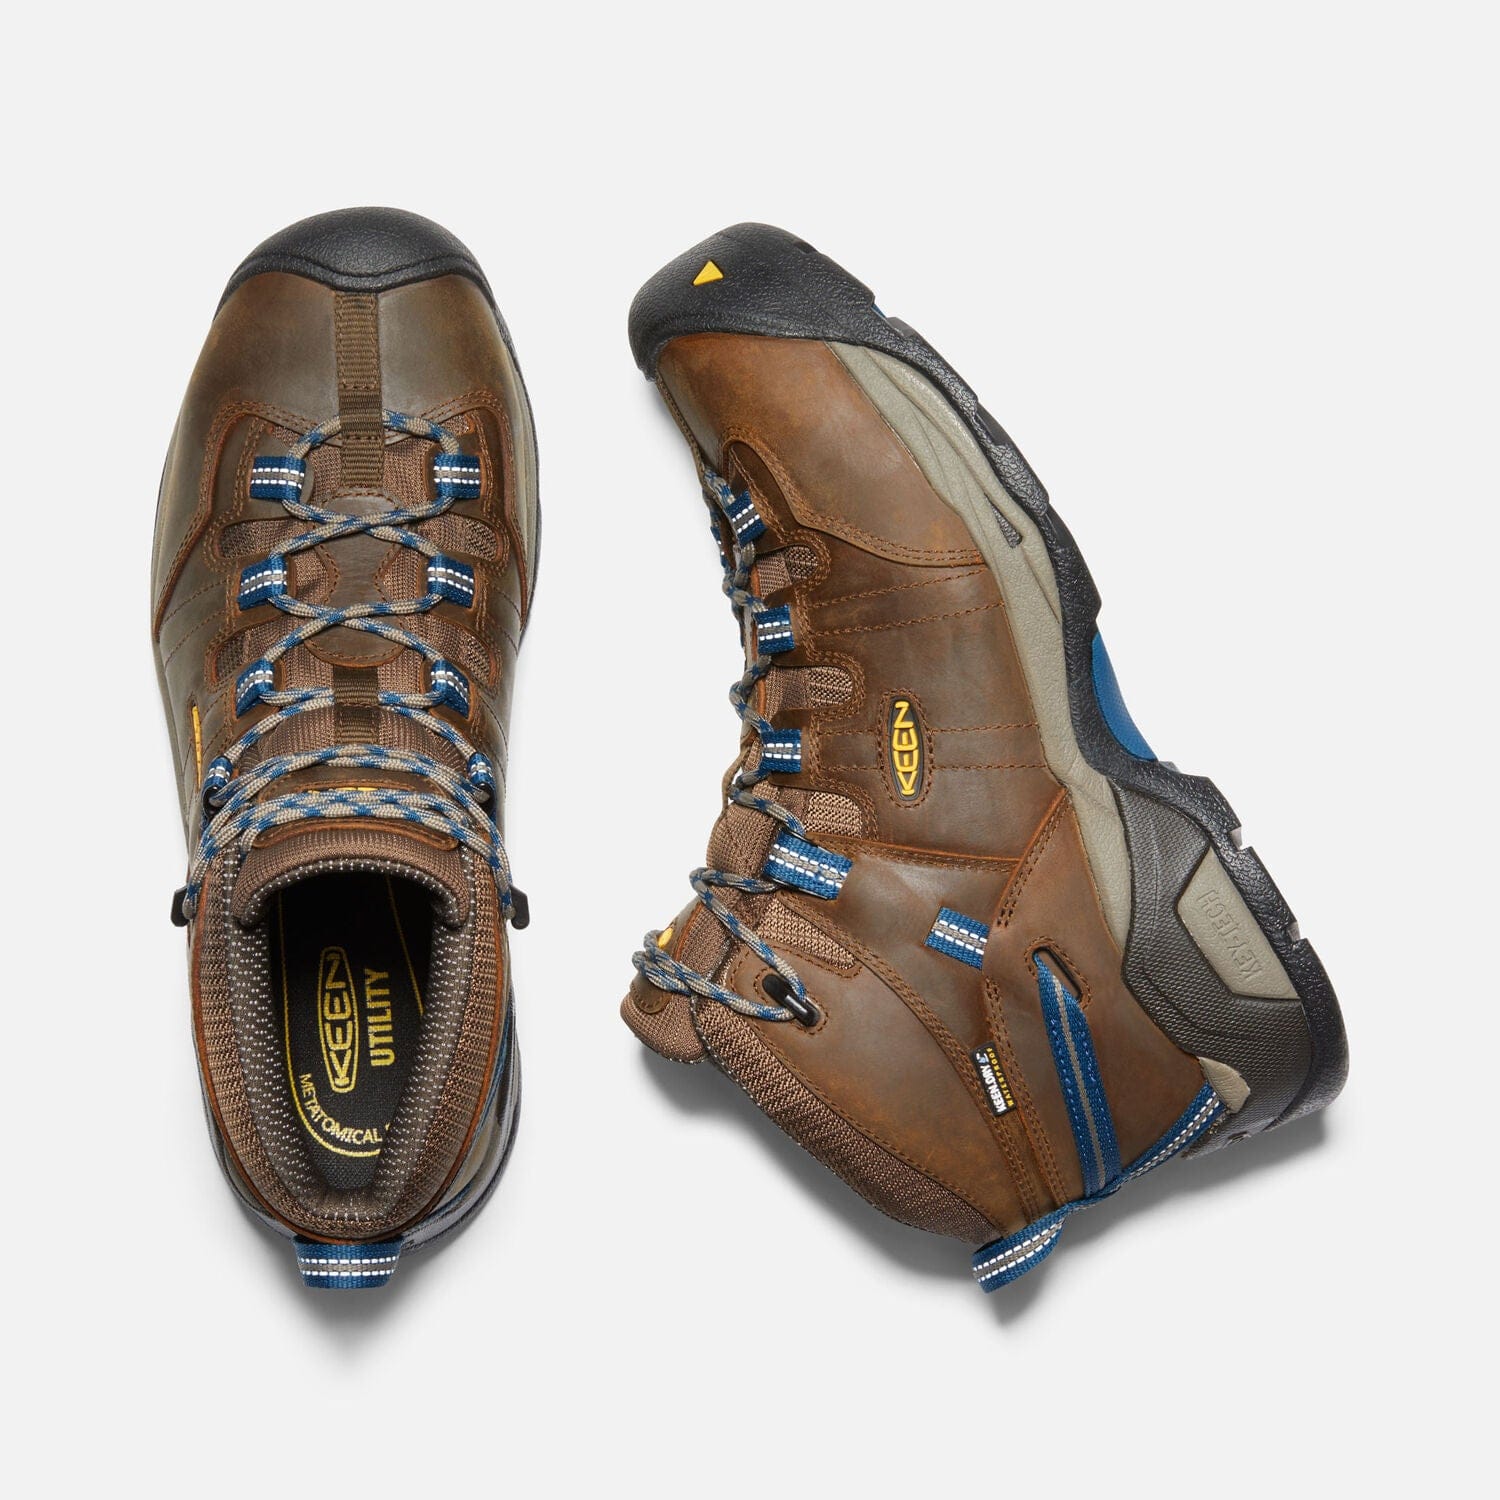 Detroit XT Steel Toe Mid Waterproof Boots product image